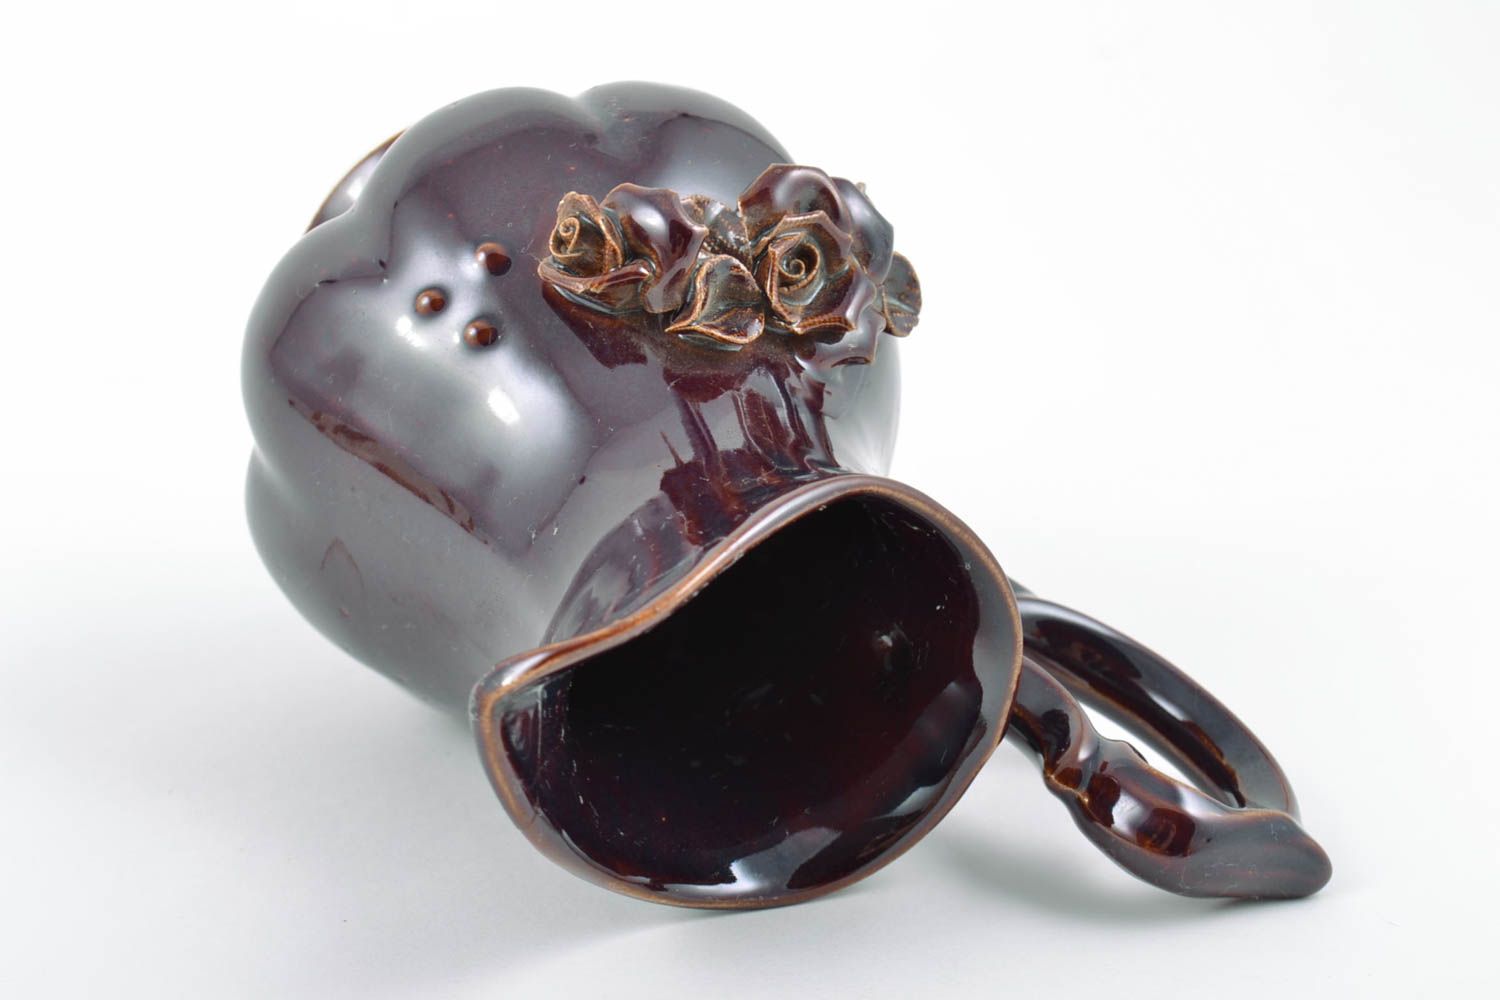 12 oz ceramic porcelain coffee jug with handle  in dark brown color 0,5 lb photo 4